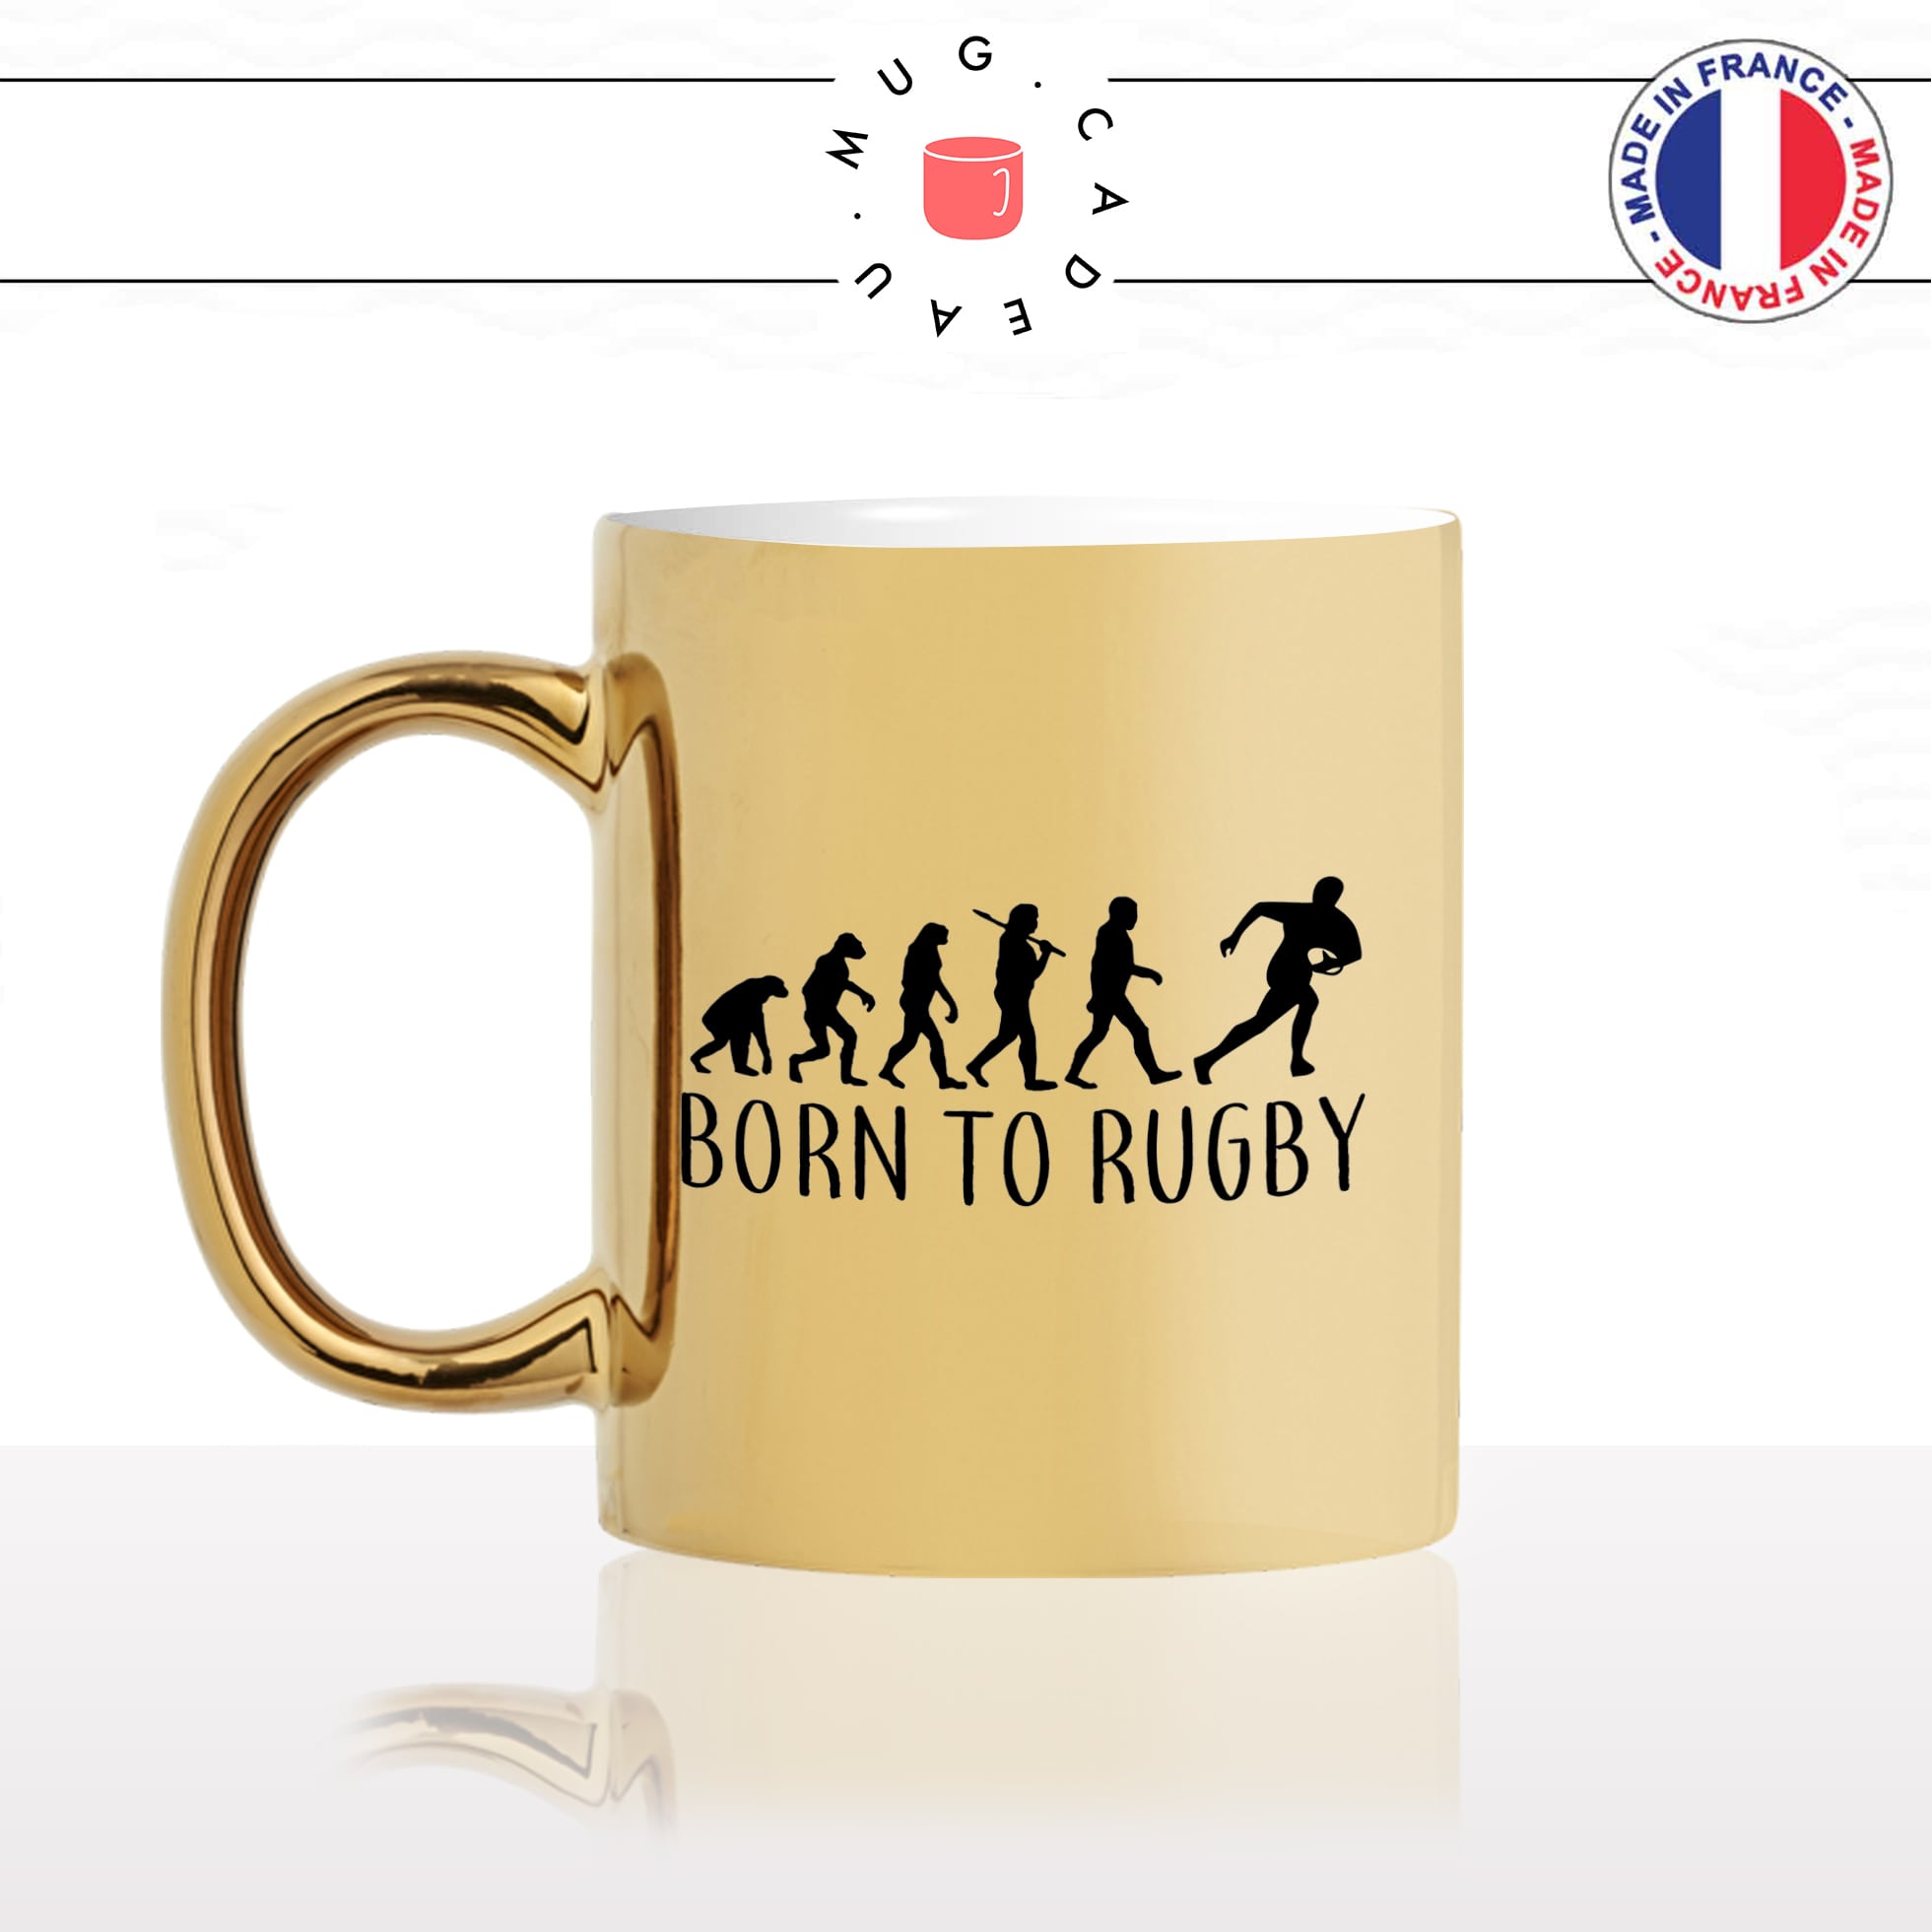 mug-tasse-or-doré-gold-born-to-rugby-sport-viril-6-nation-rugbyman-evolution-humaine-homme-cool-idée-cadeau-fun-café-thé-personnalisé-min